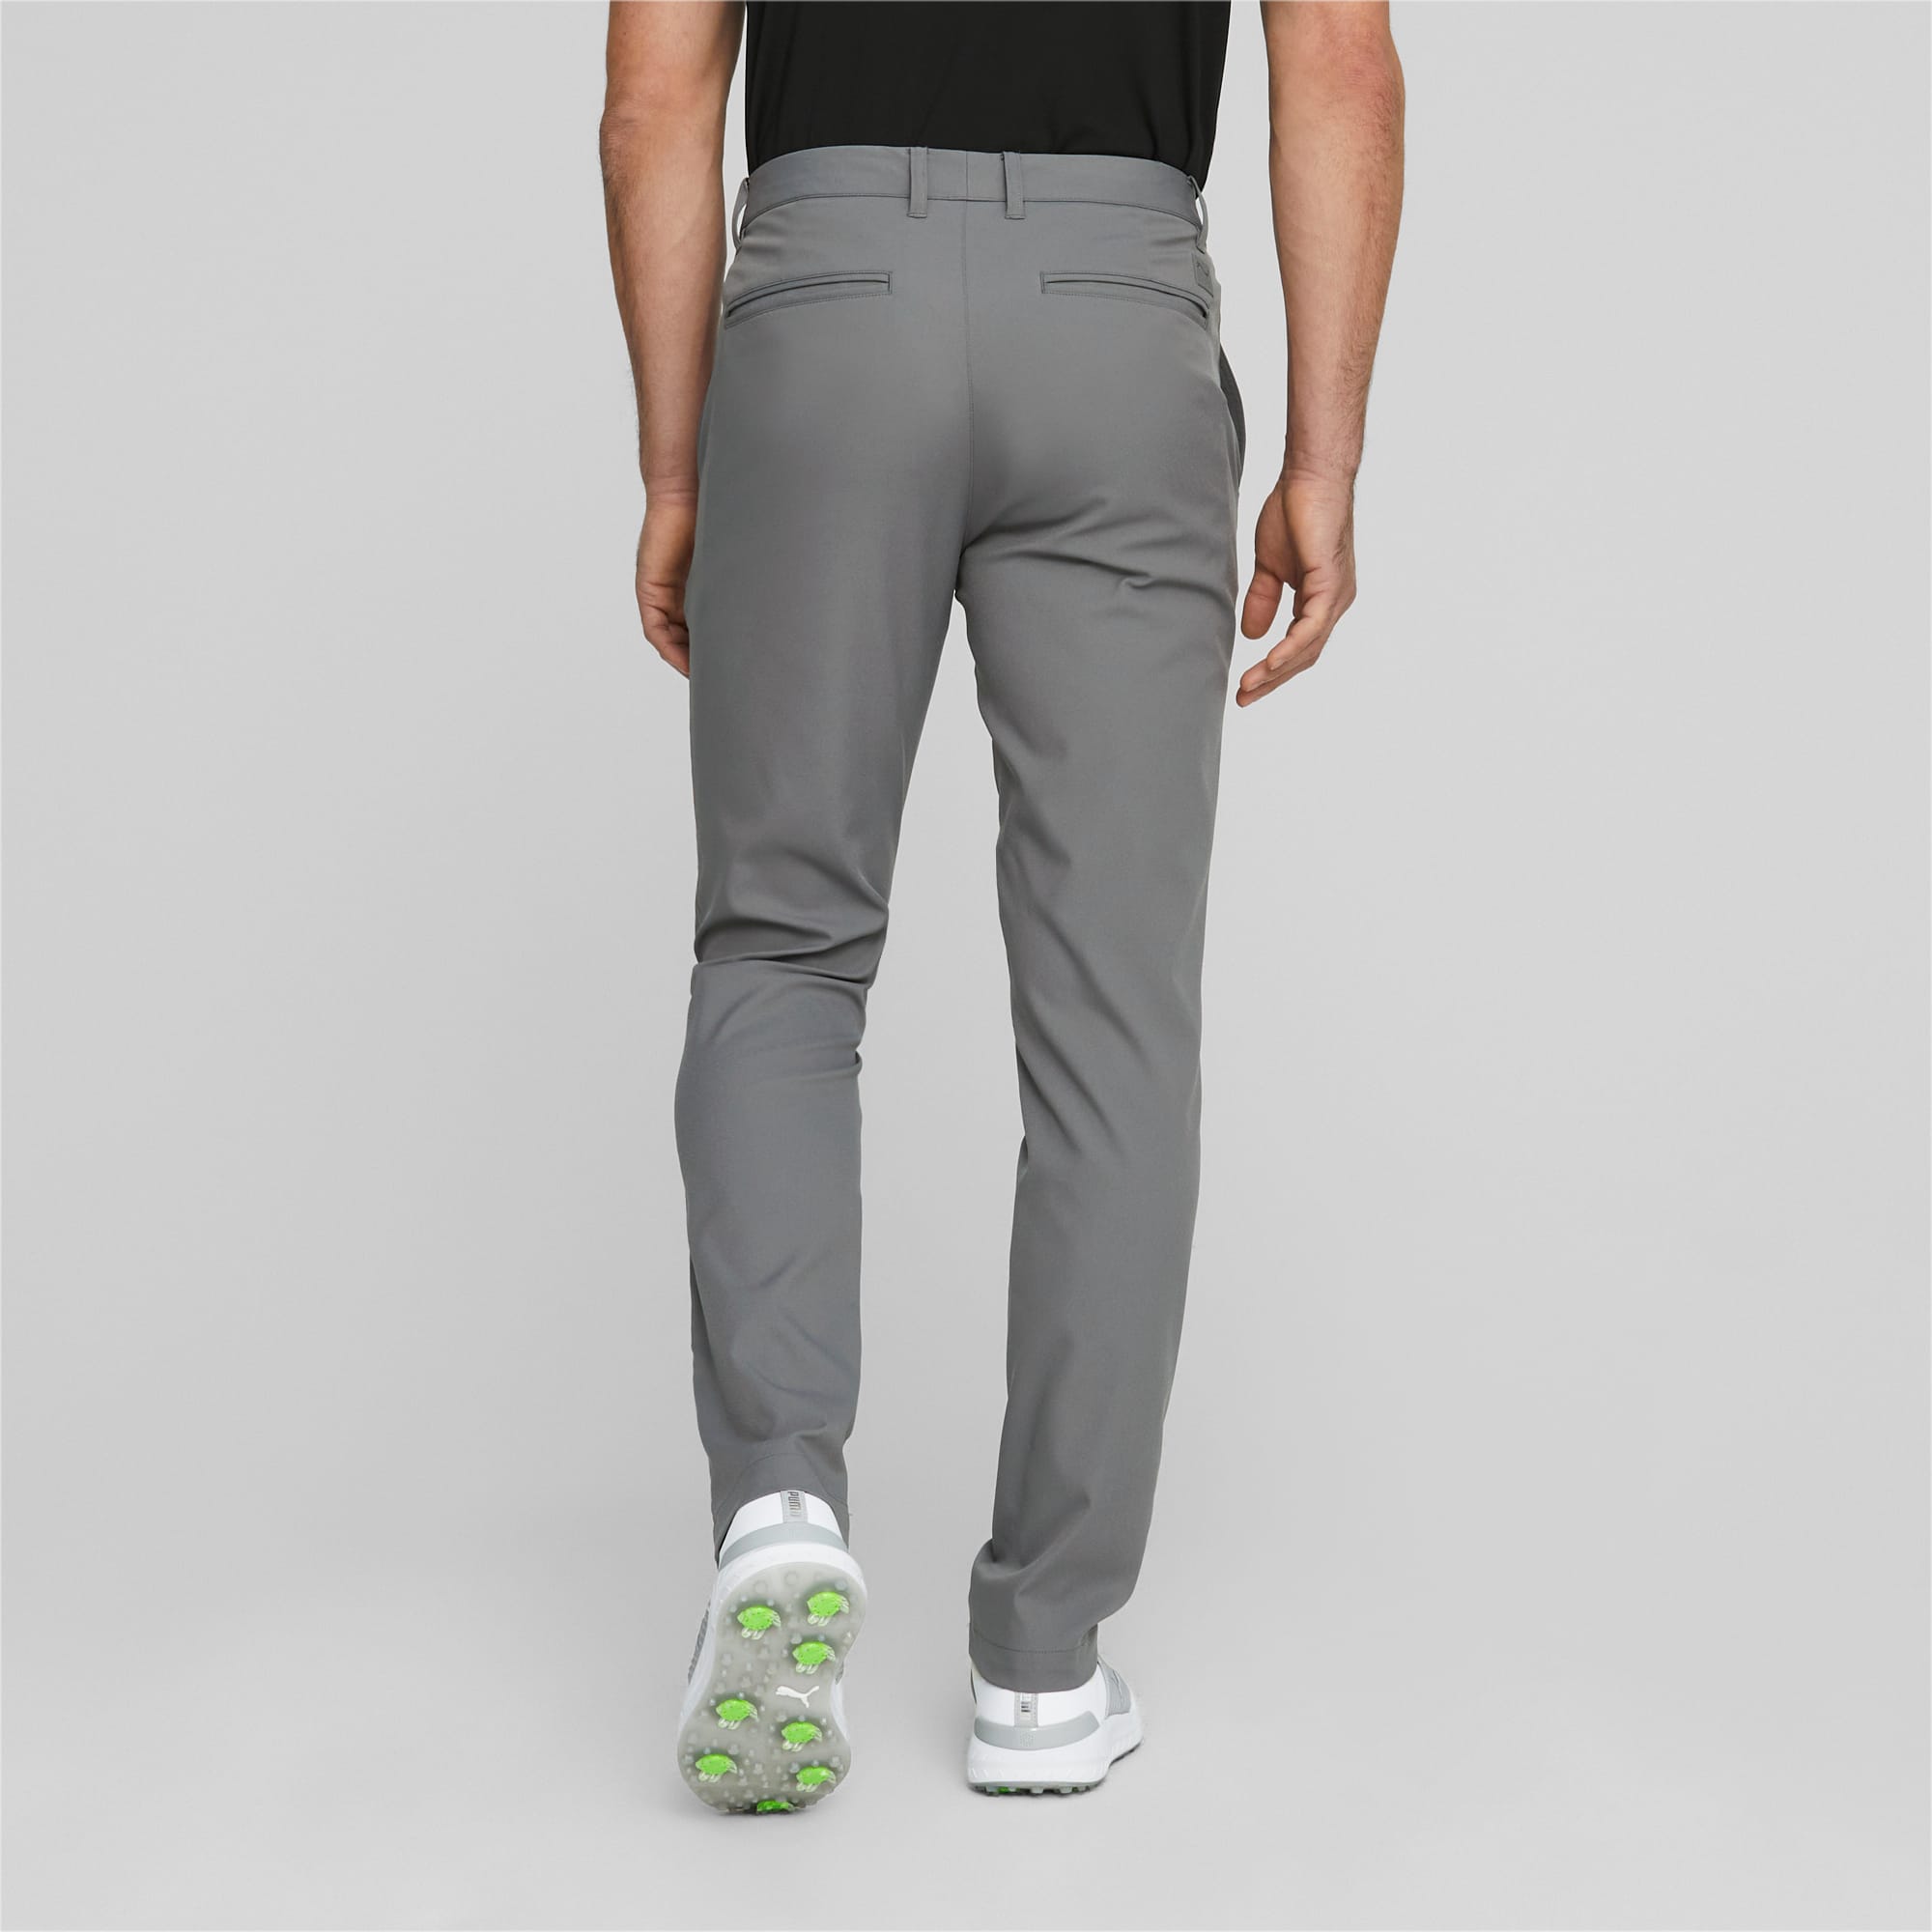 PUMA Dealer Tailored Golf Pants Men, Slate Sky, Size 40/30, Clothing